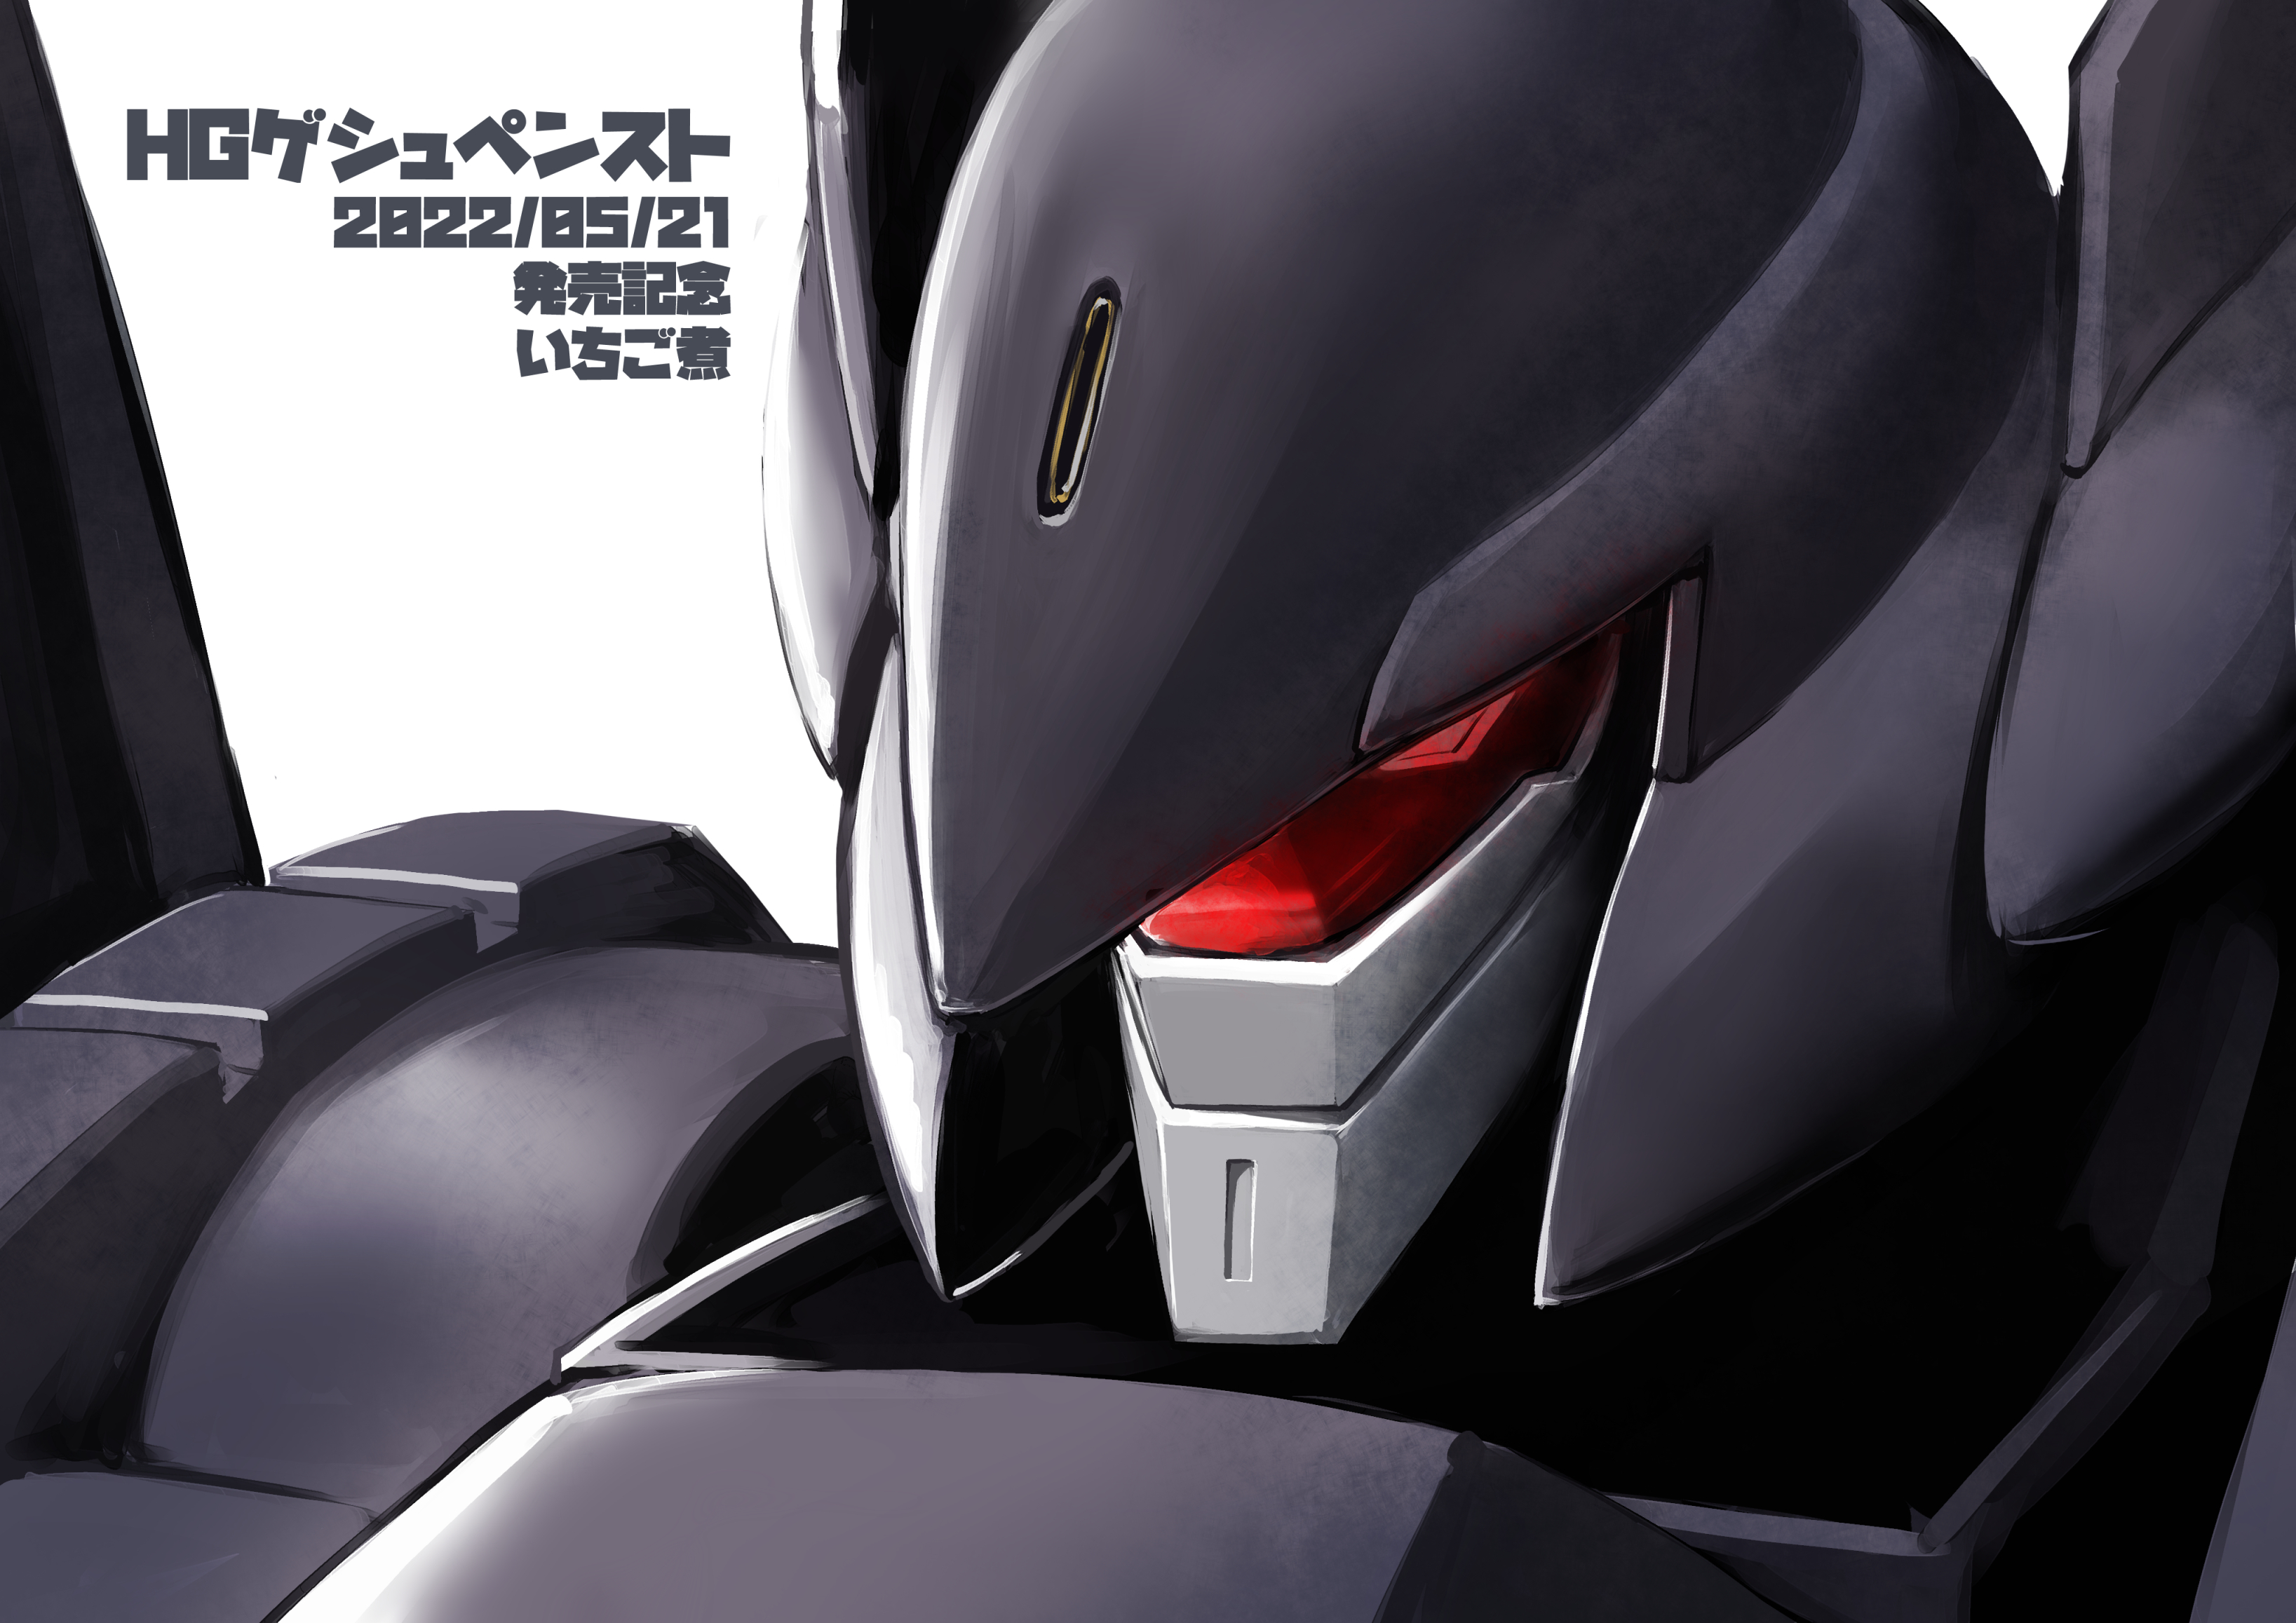 Anime 3274x2315 anime mechs Super Robot Taisen Gespenst artwork digital art fan art Japanese